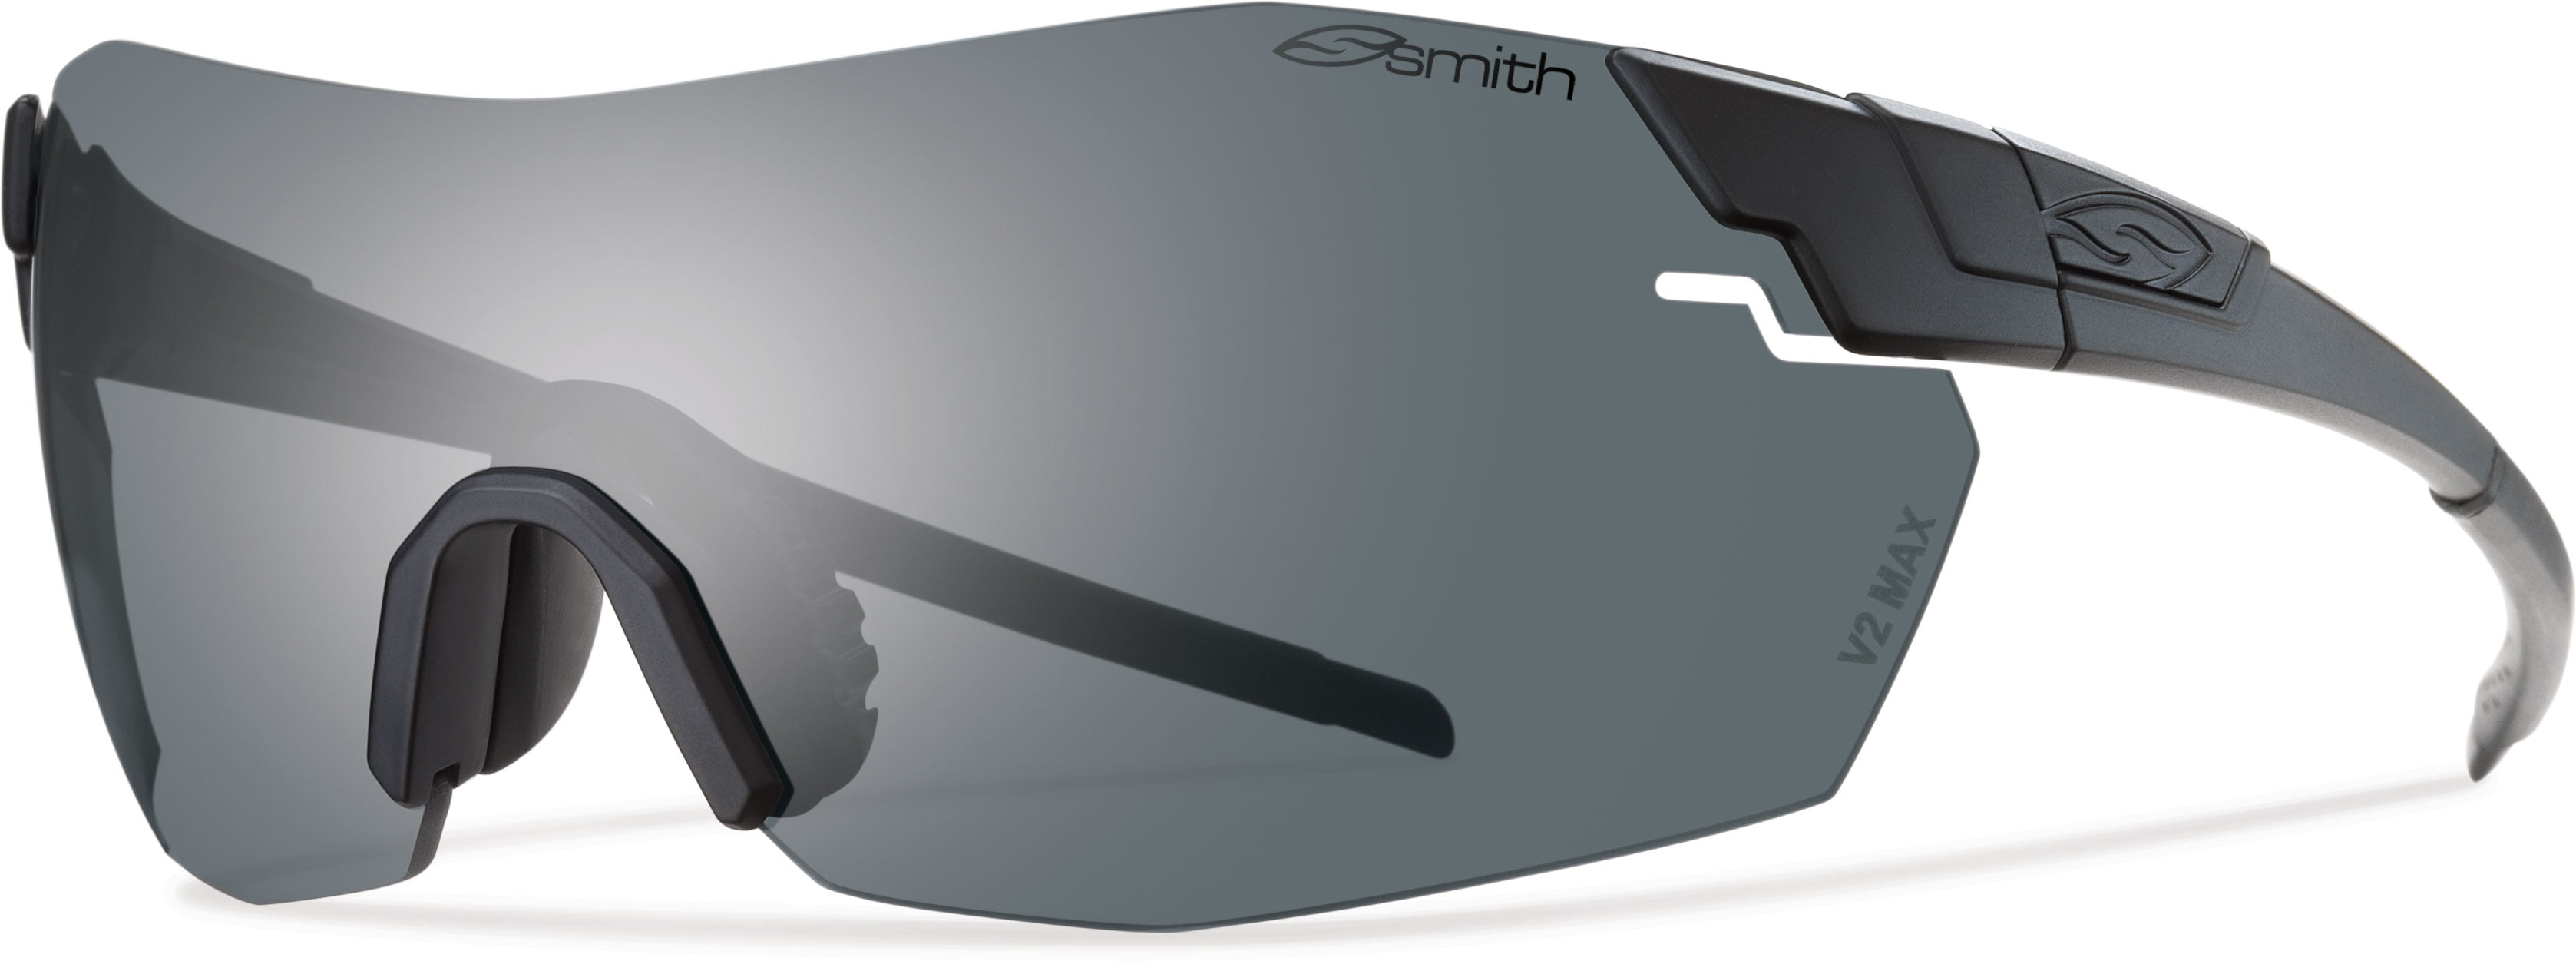 Smith Smith Optics Pivlock V2 Max Tactical Elite Sunglasses Os Black